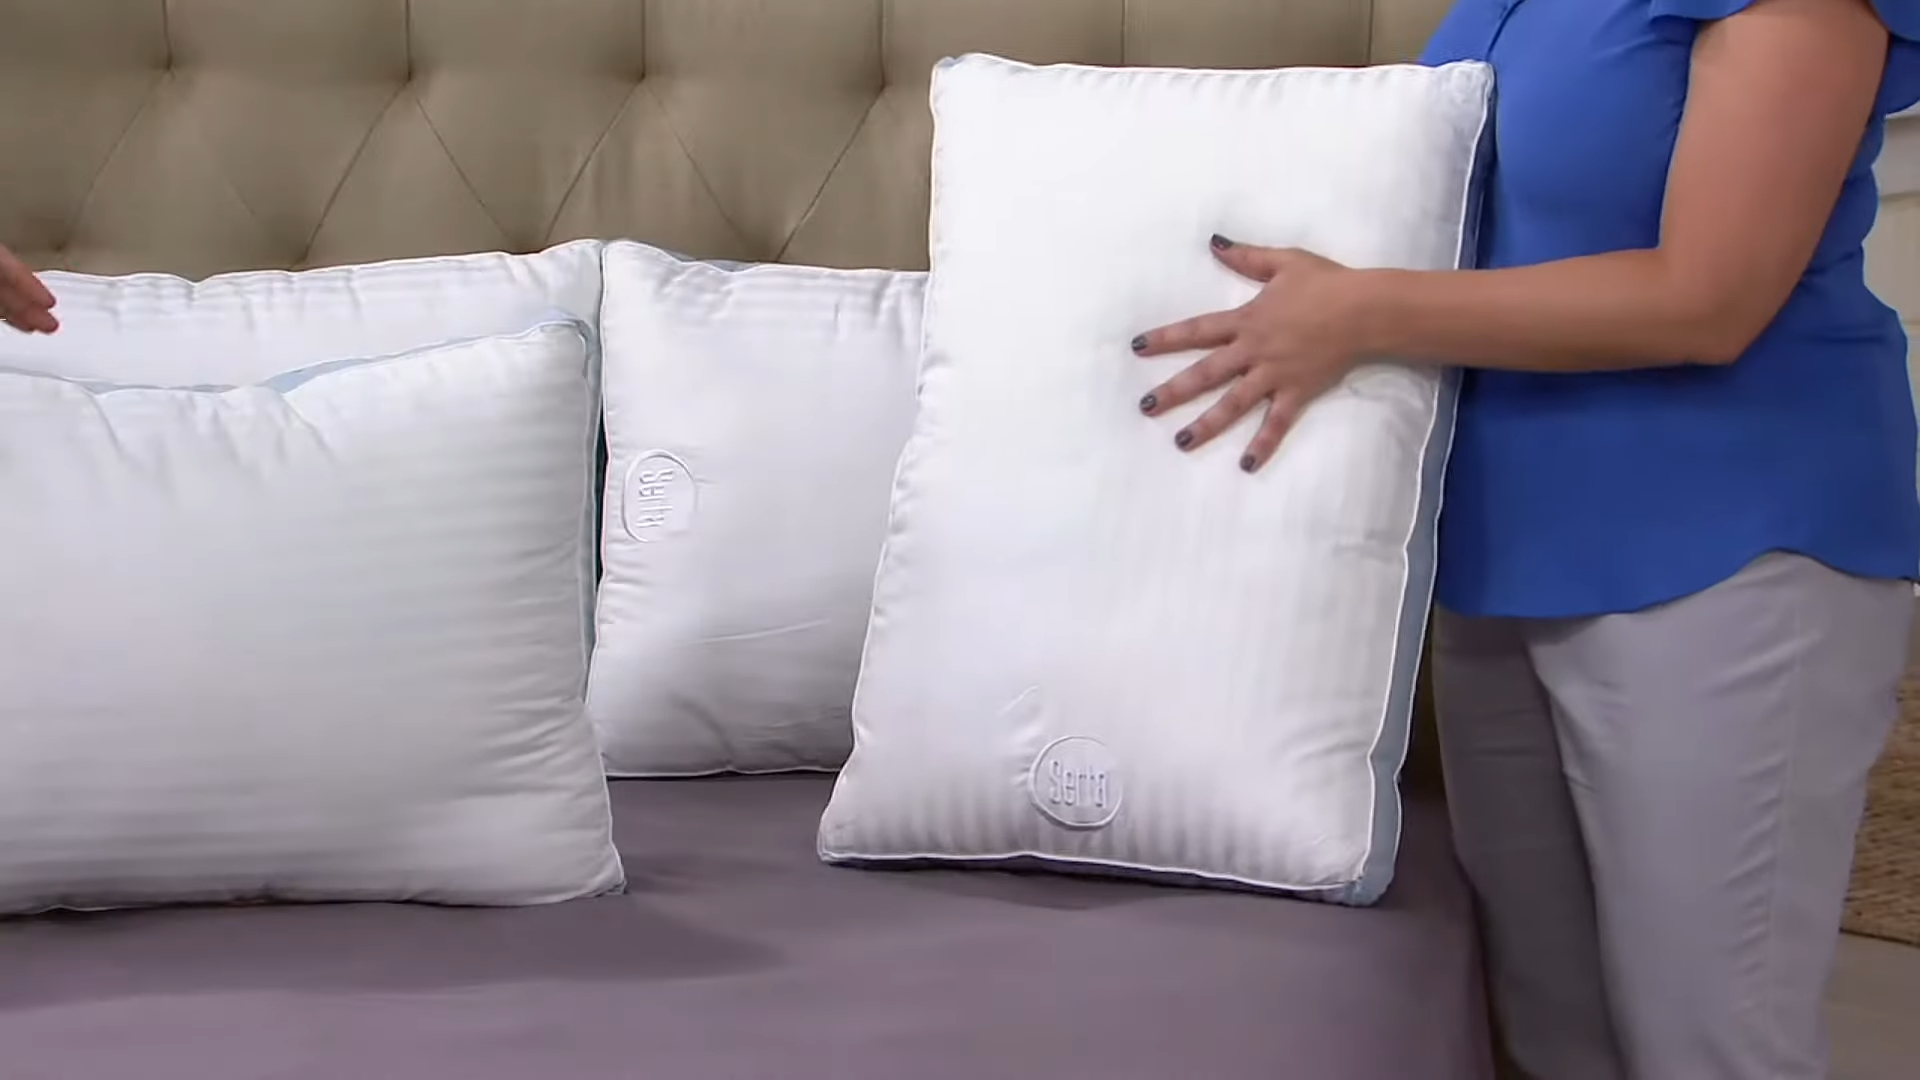 Gusseted Pillow vs Regular